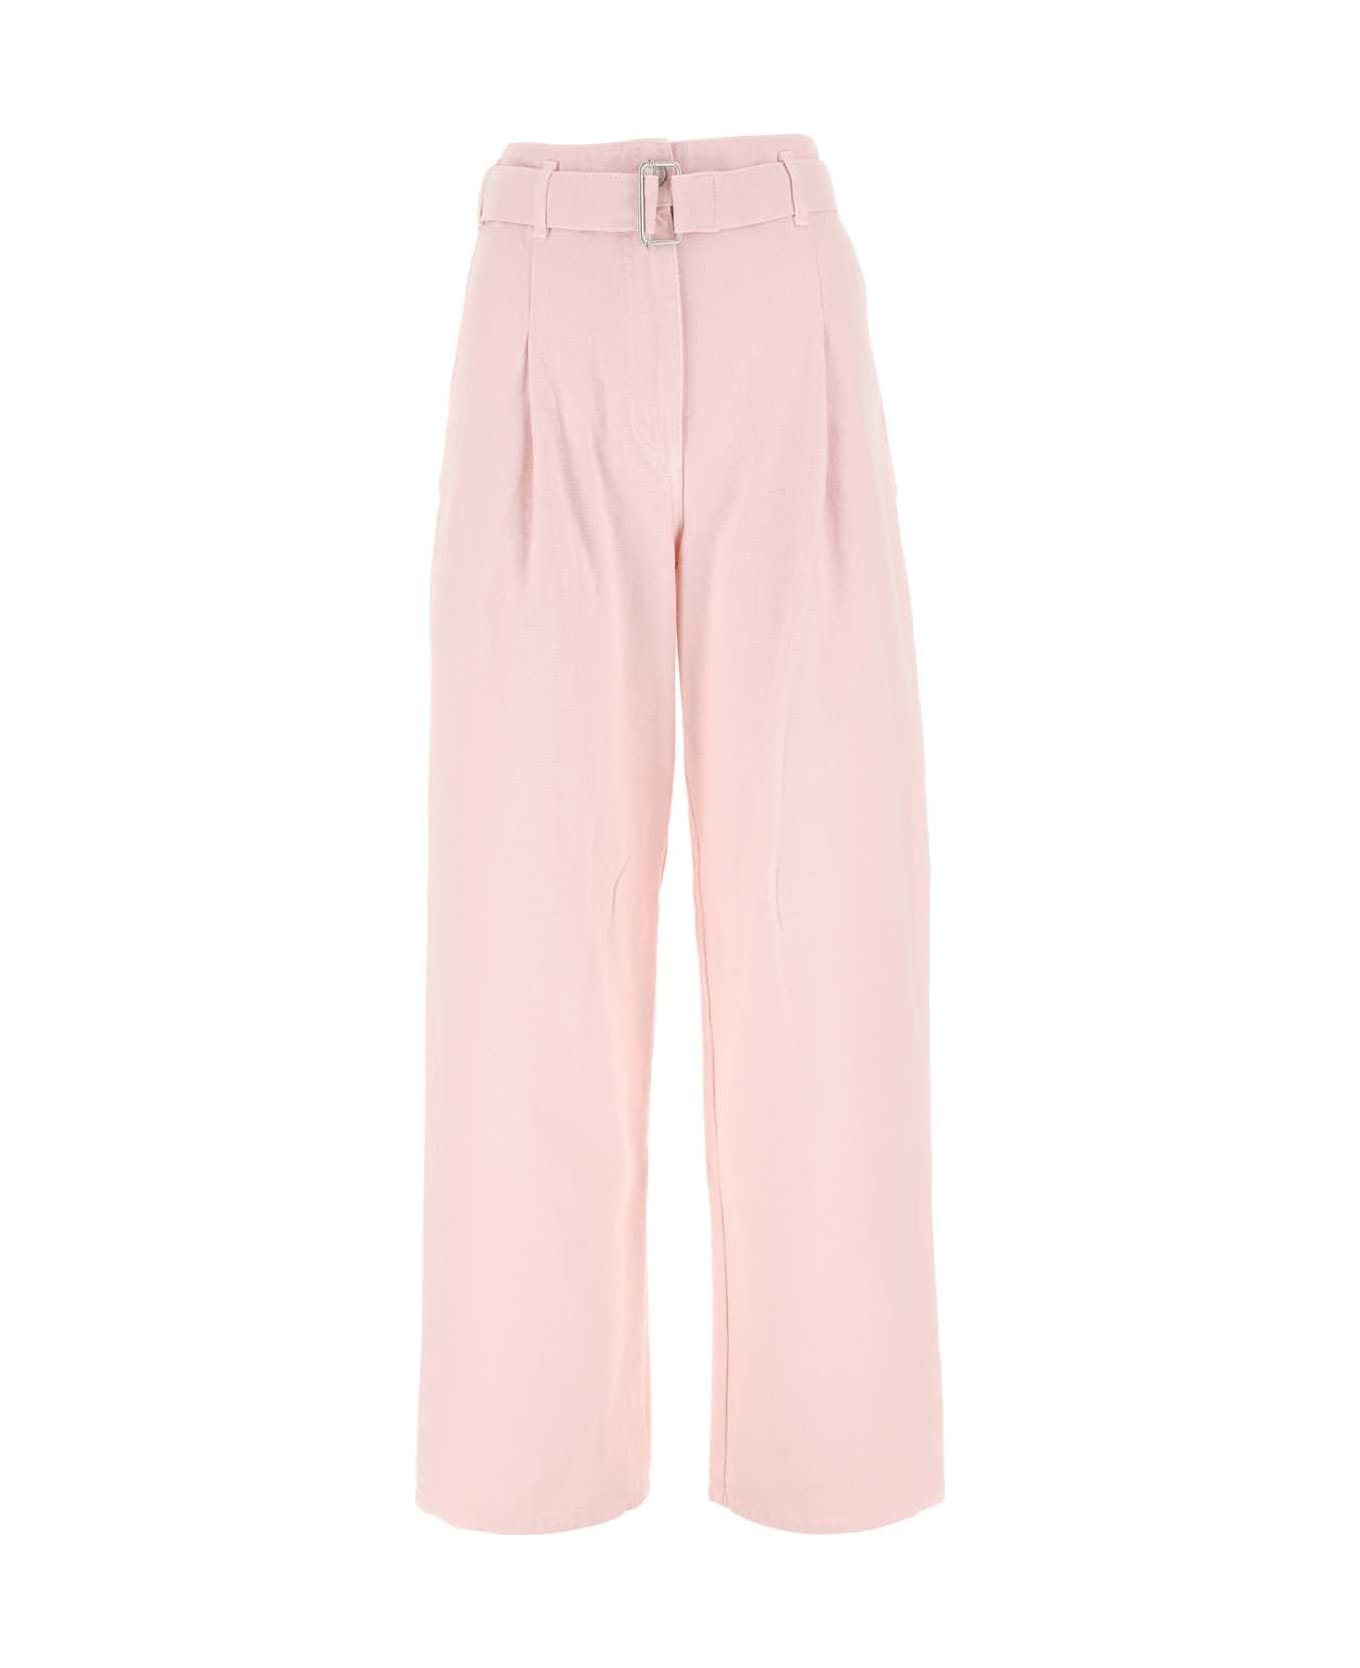 Philosophy di Lorenzo Serafini Light Pink Cotton Pant - Pink